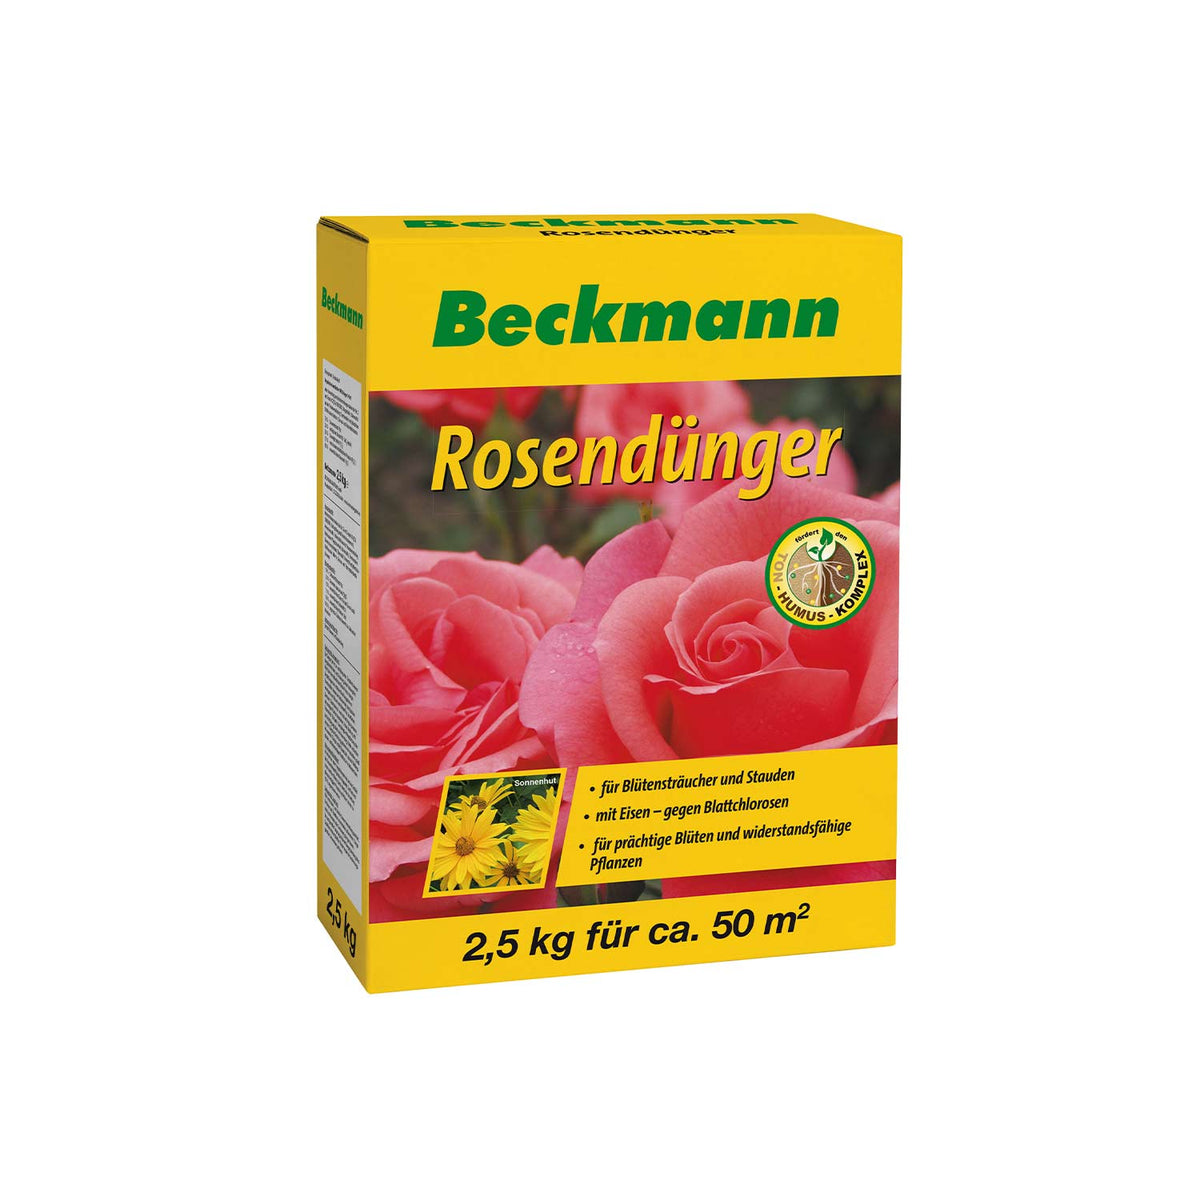 Rosendünger - 2,5 kg - Beckmann